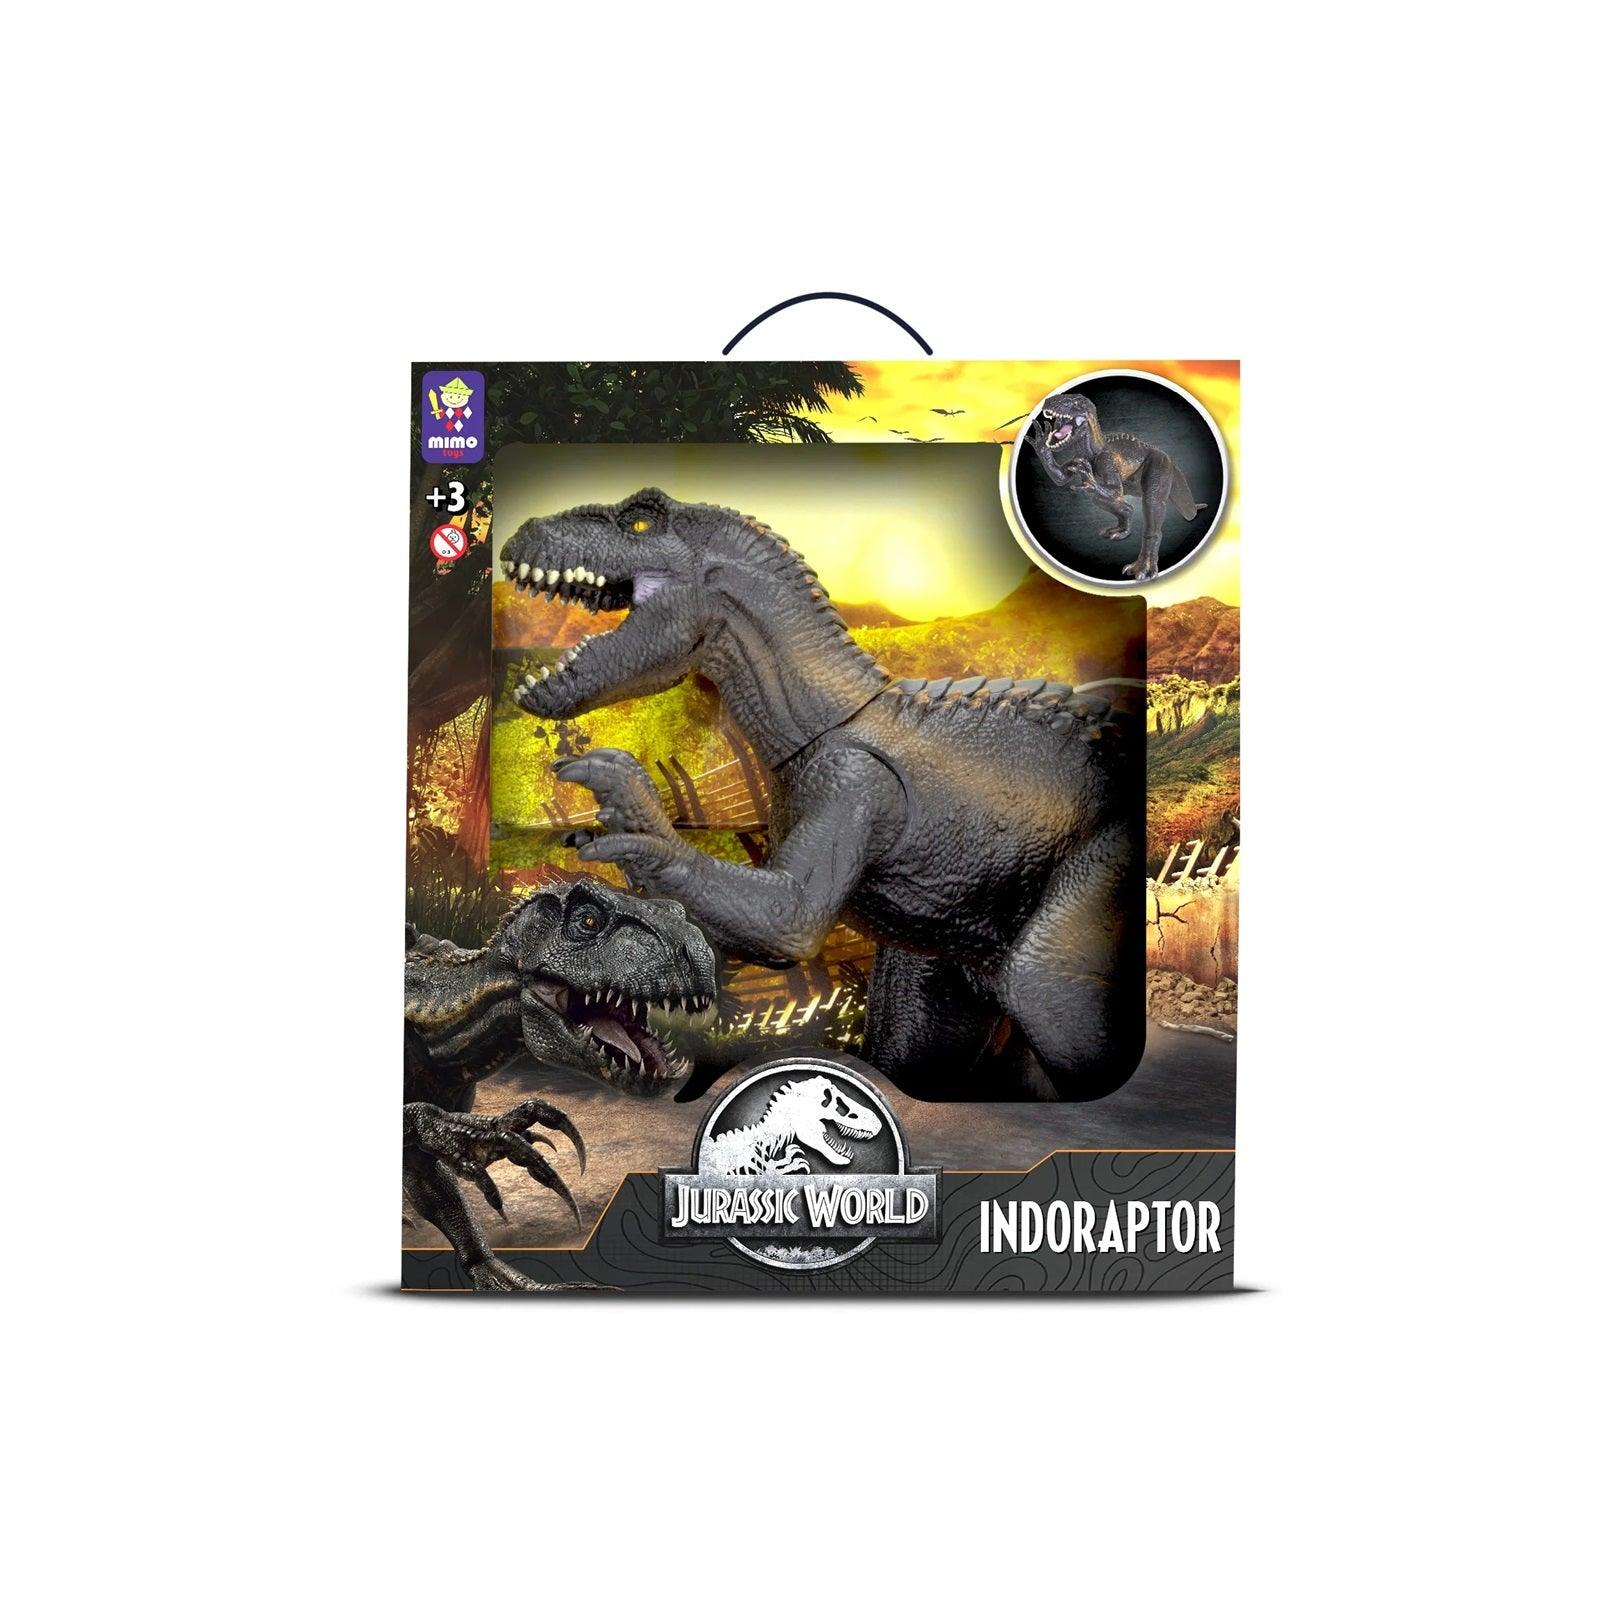 Jurassic World Indoraptor Articulated Figure - Mimo Toys - Brazilian Shop